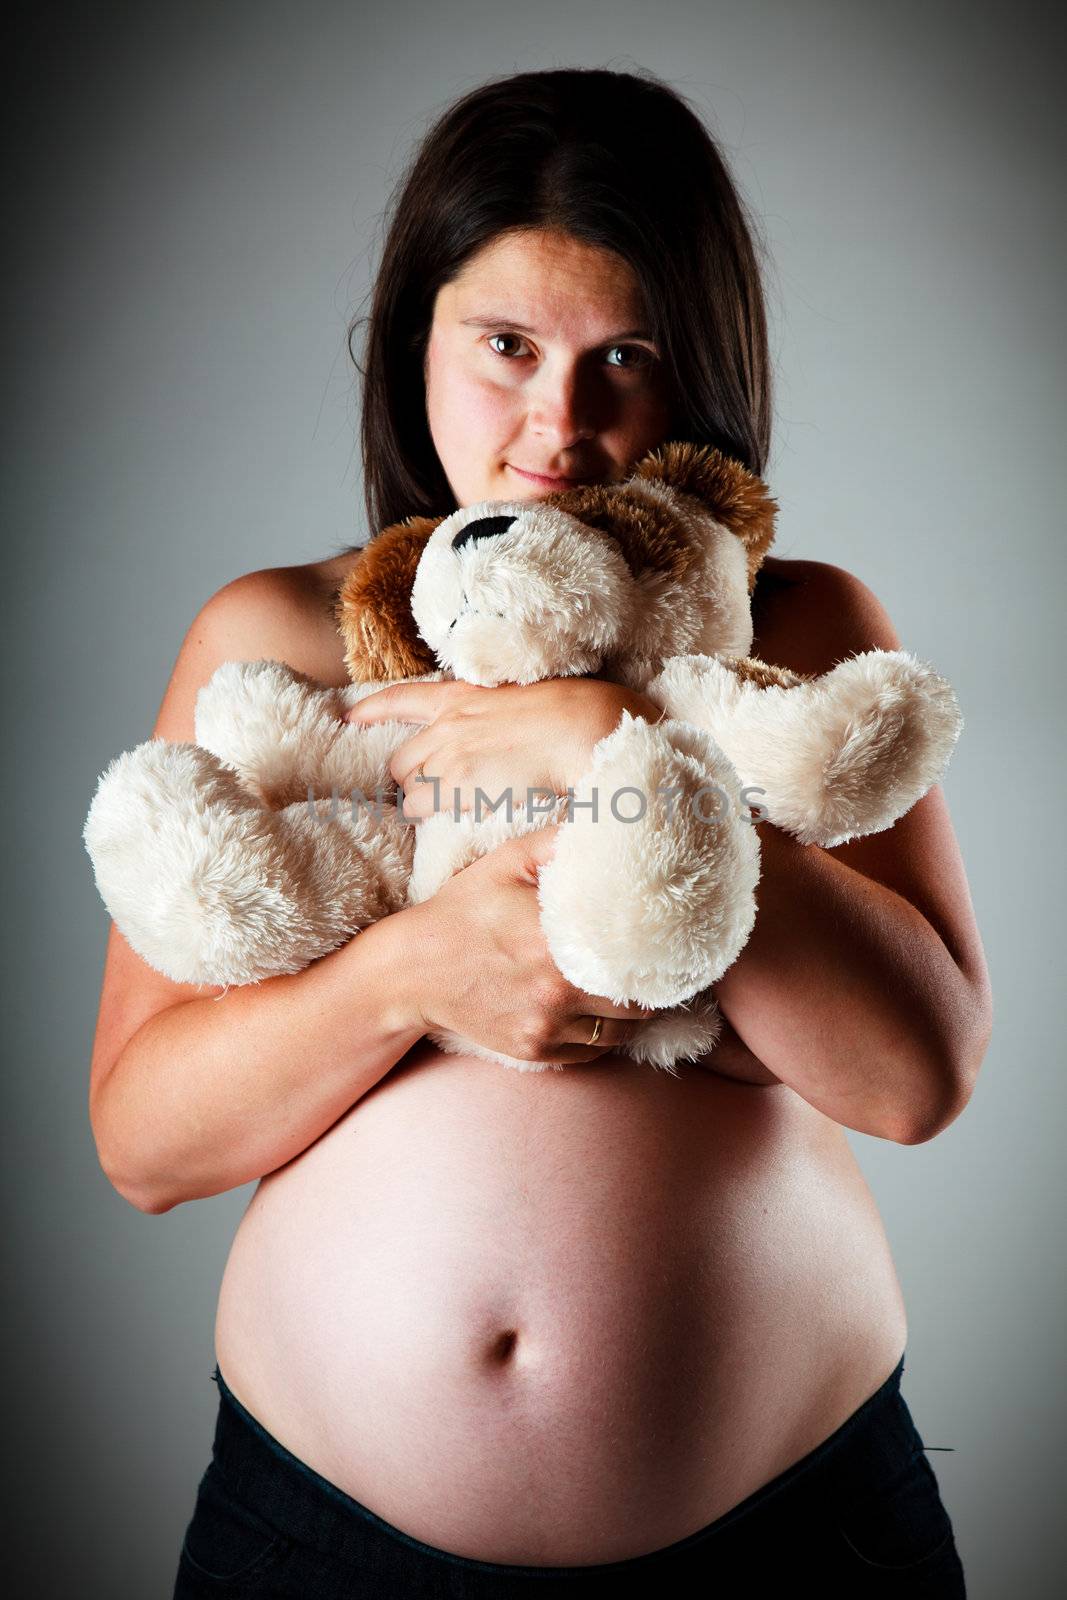 32 weeks pregnant woman holding a teddy bear